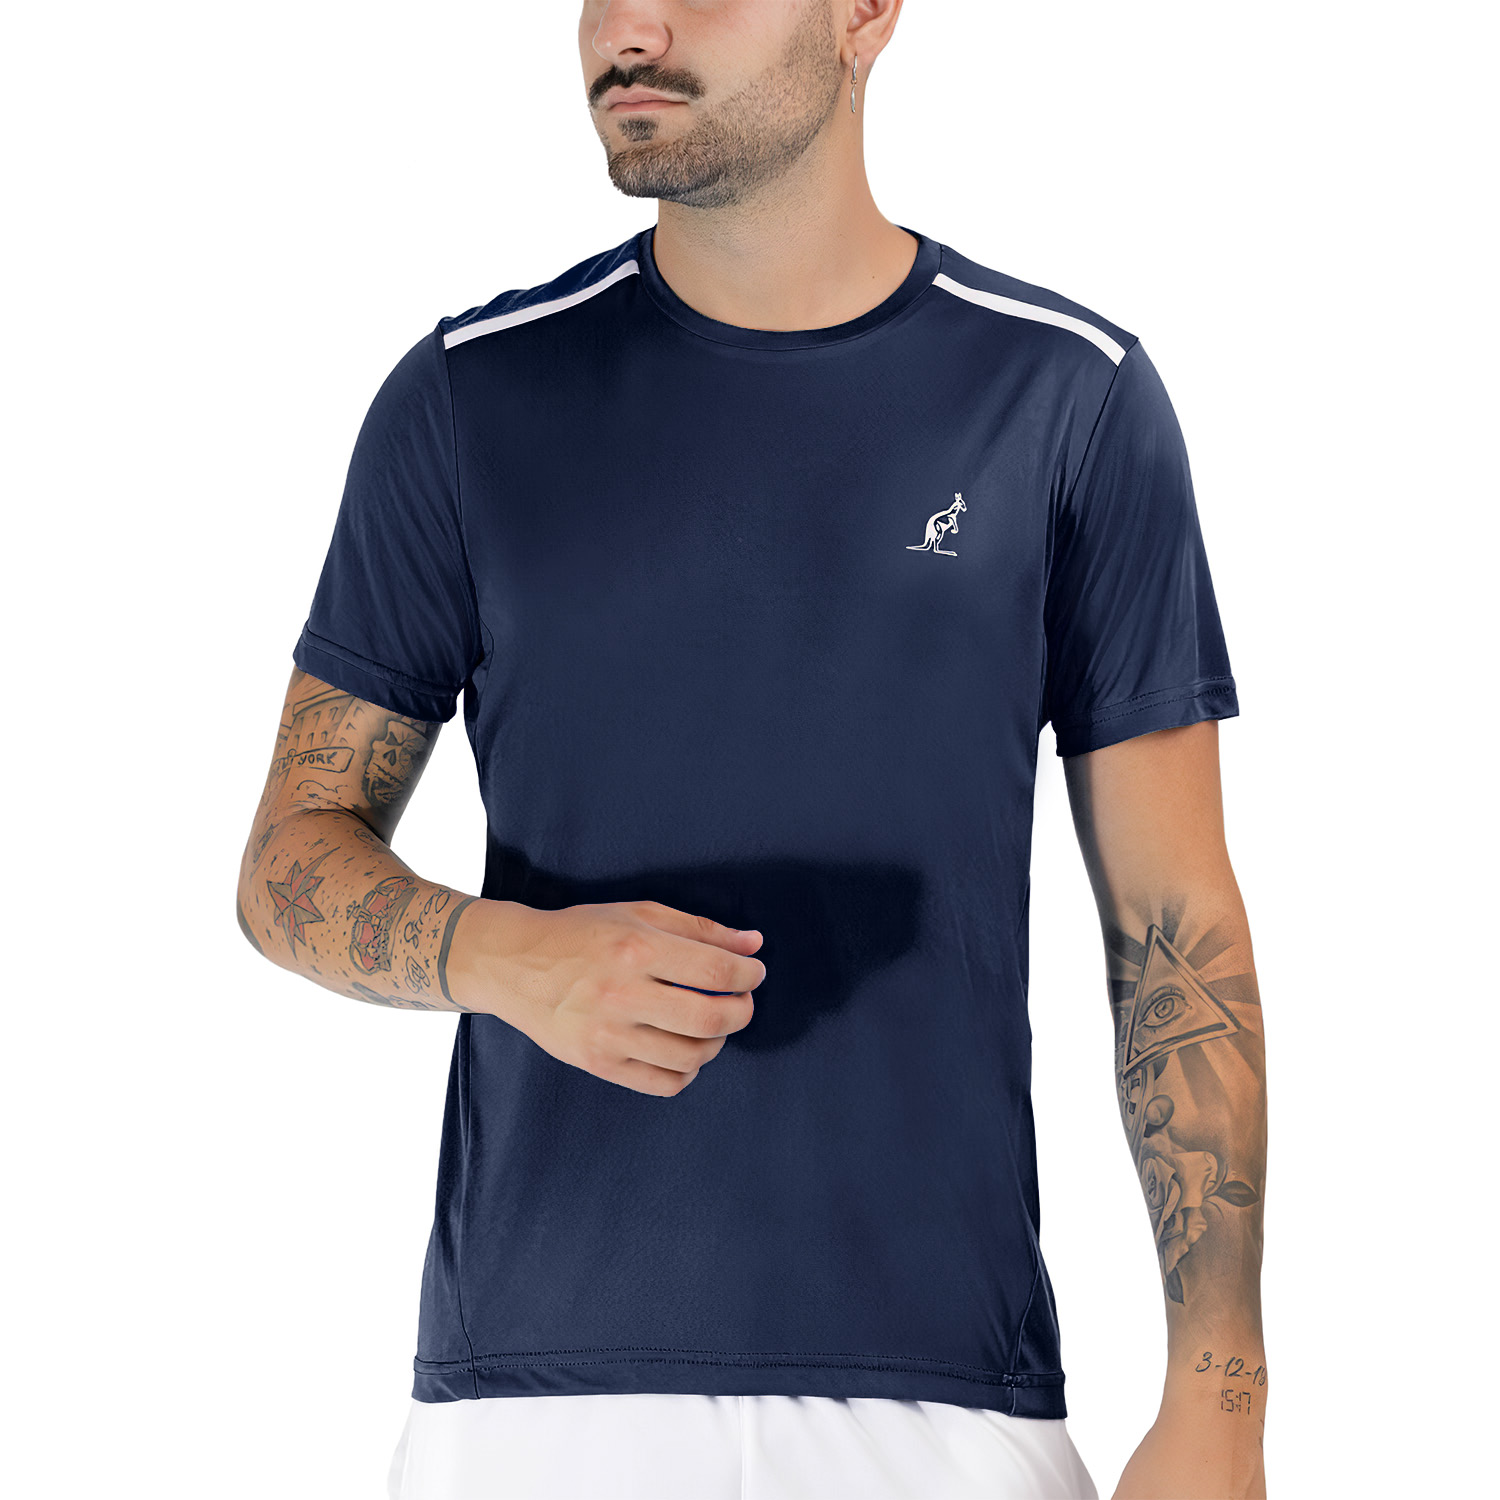 Australian Ace T-Shirt - Kosmo Blu/Bianco